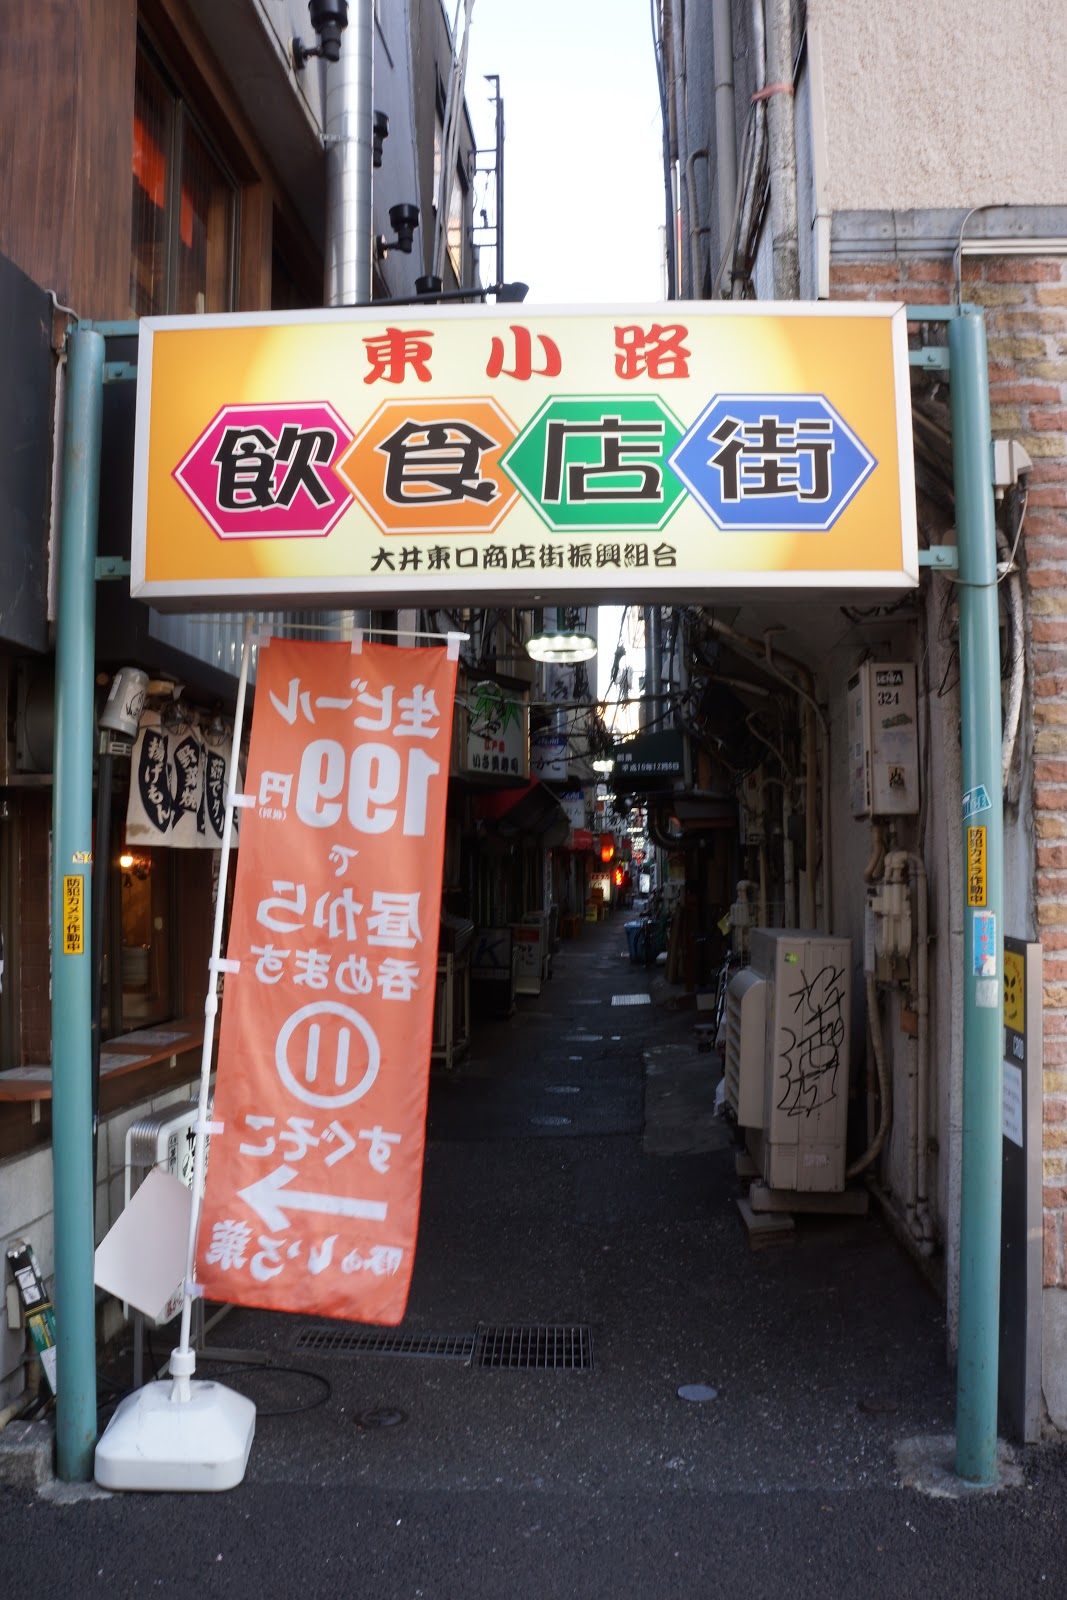 Tokyo Explorer S Map 東小路飲食店街 大井町で昼飲み せんべろ 東京マップ